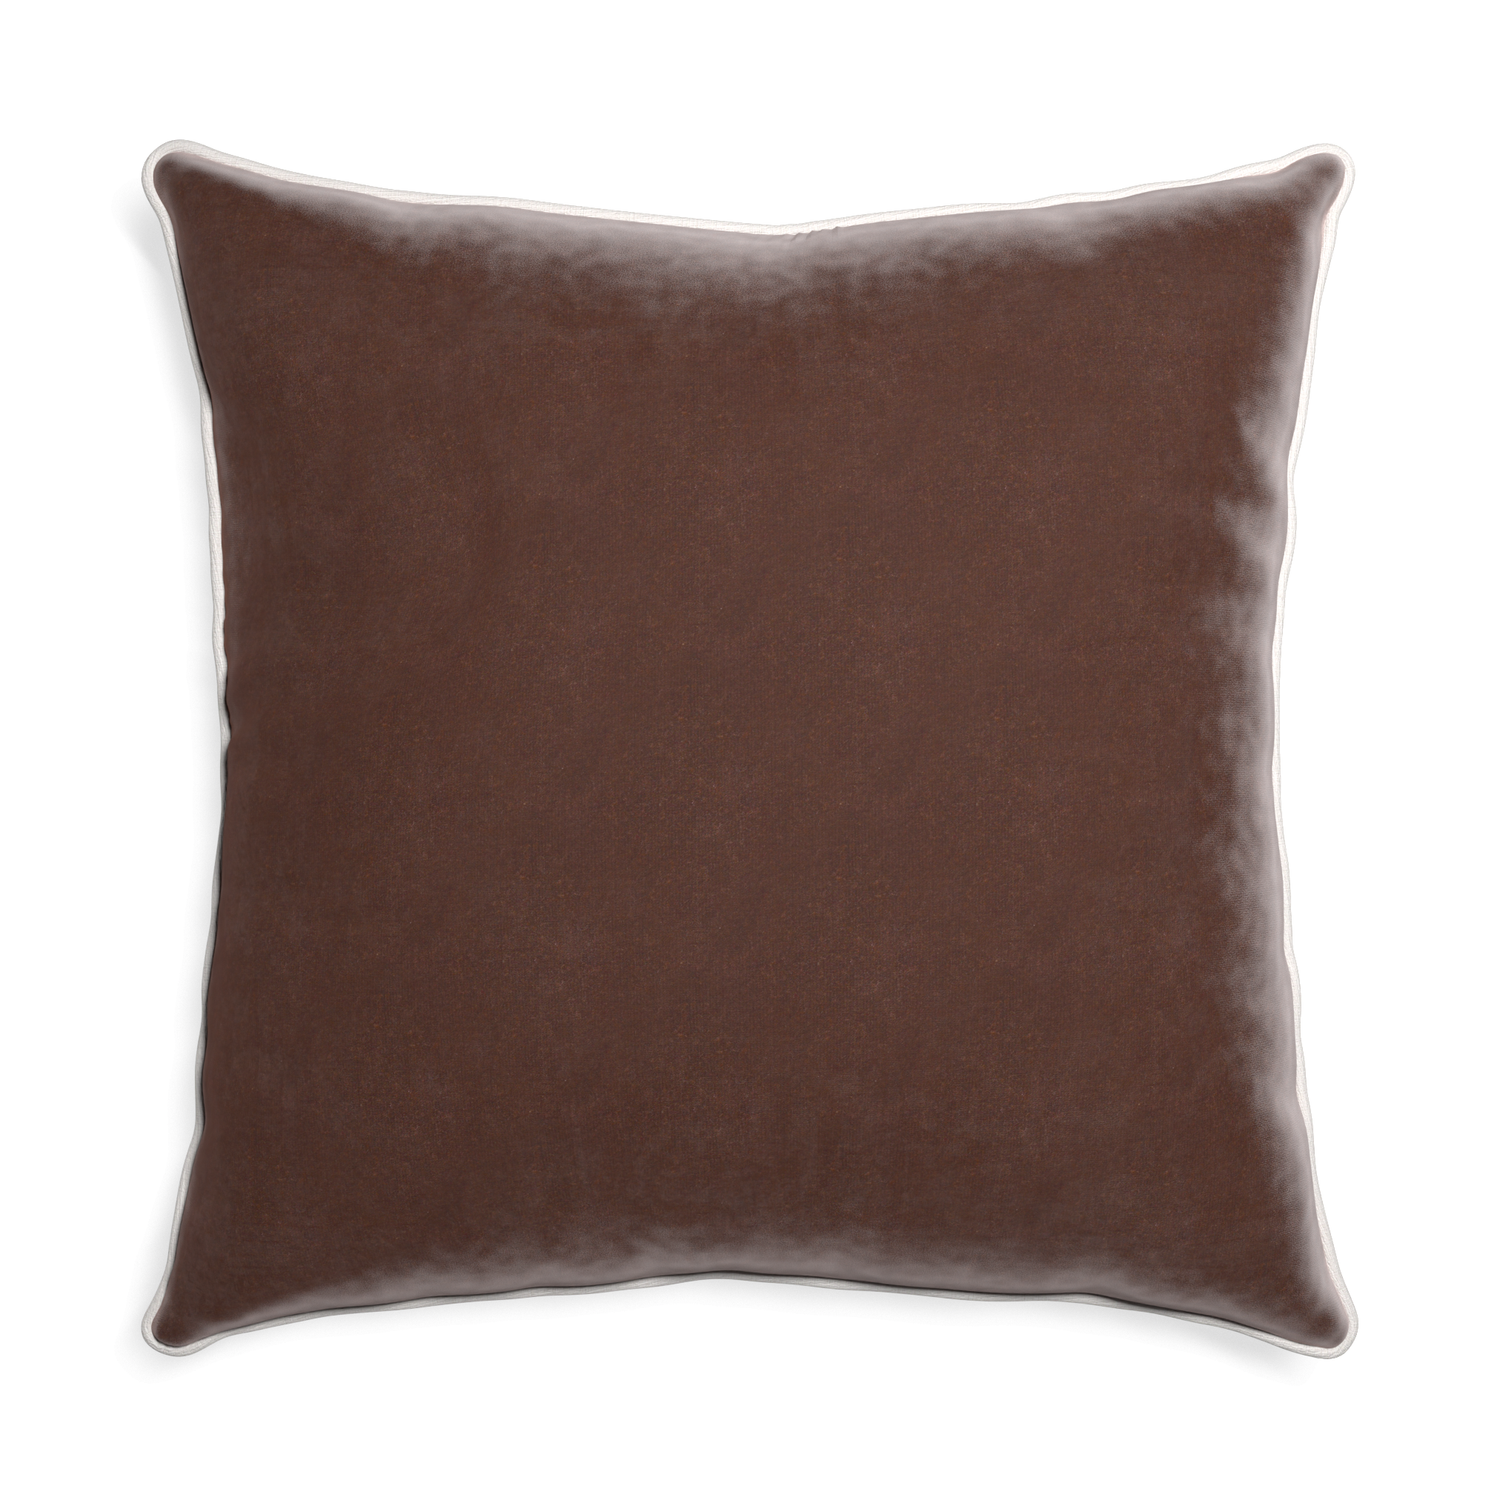 Euro-sham walnut velvet custom pillow with snow piping on white background